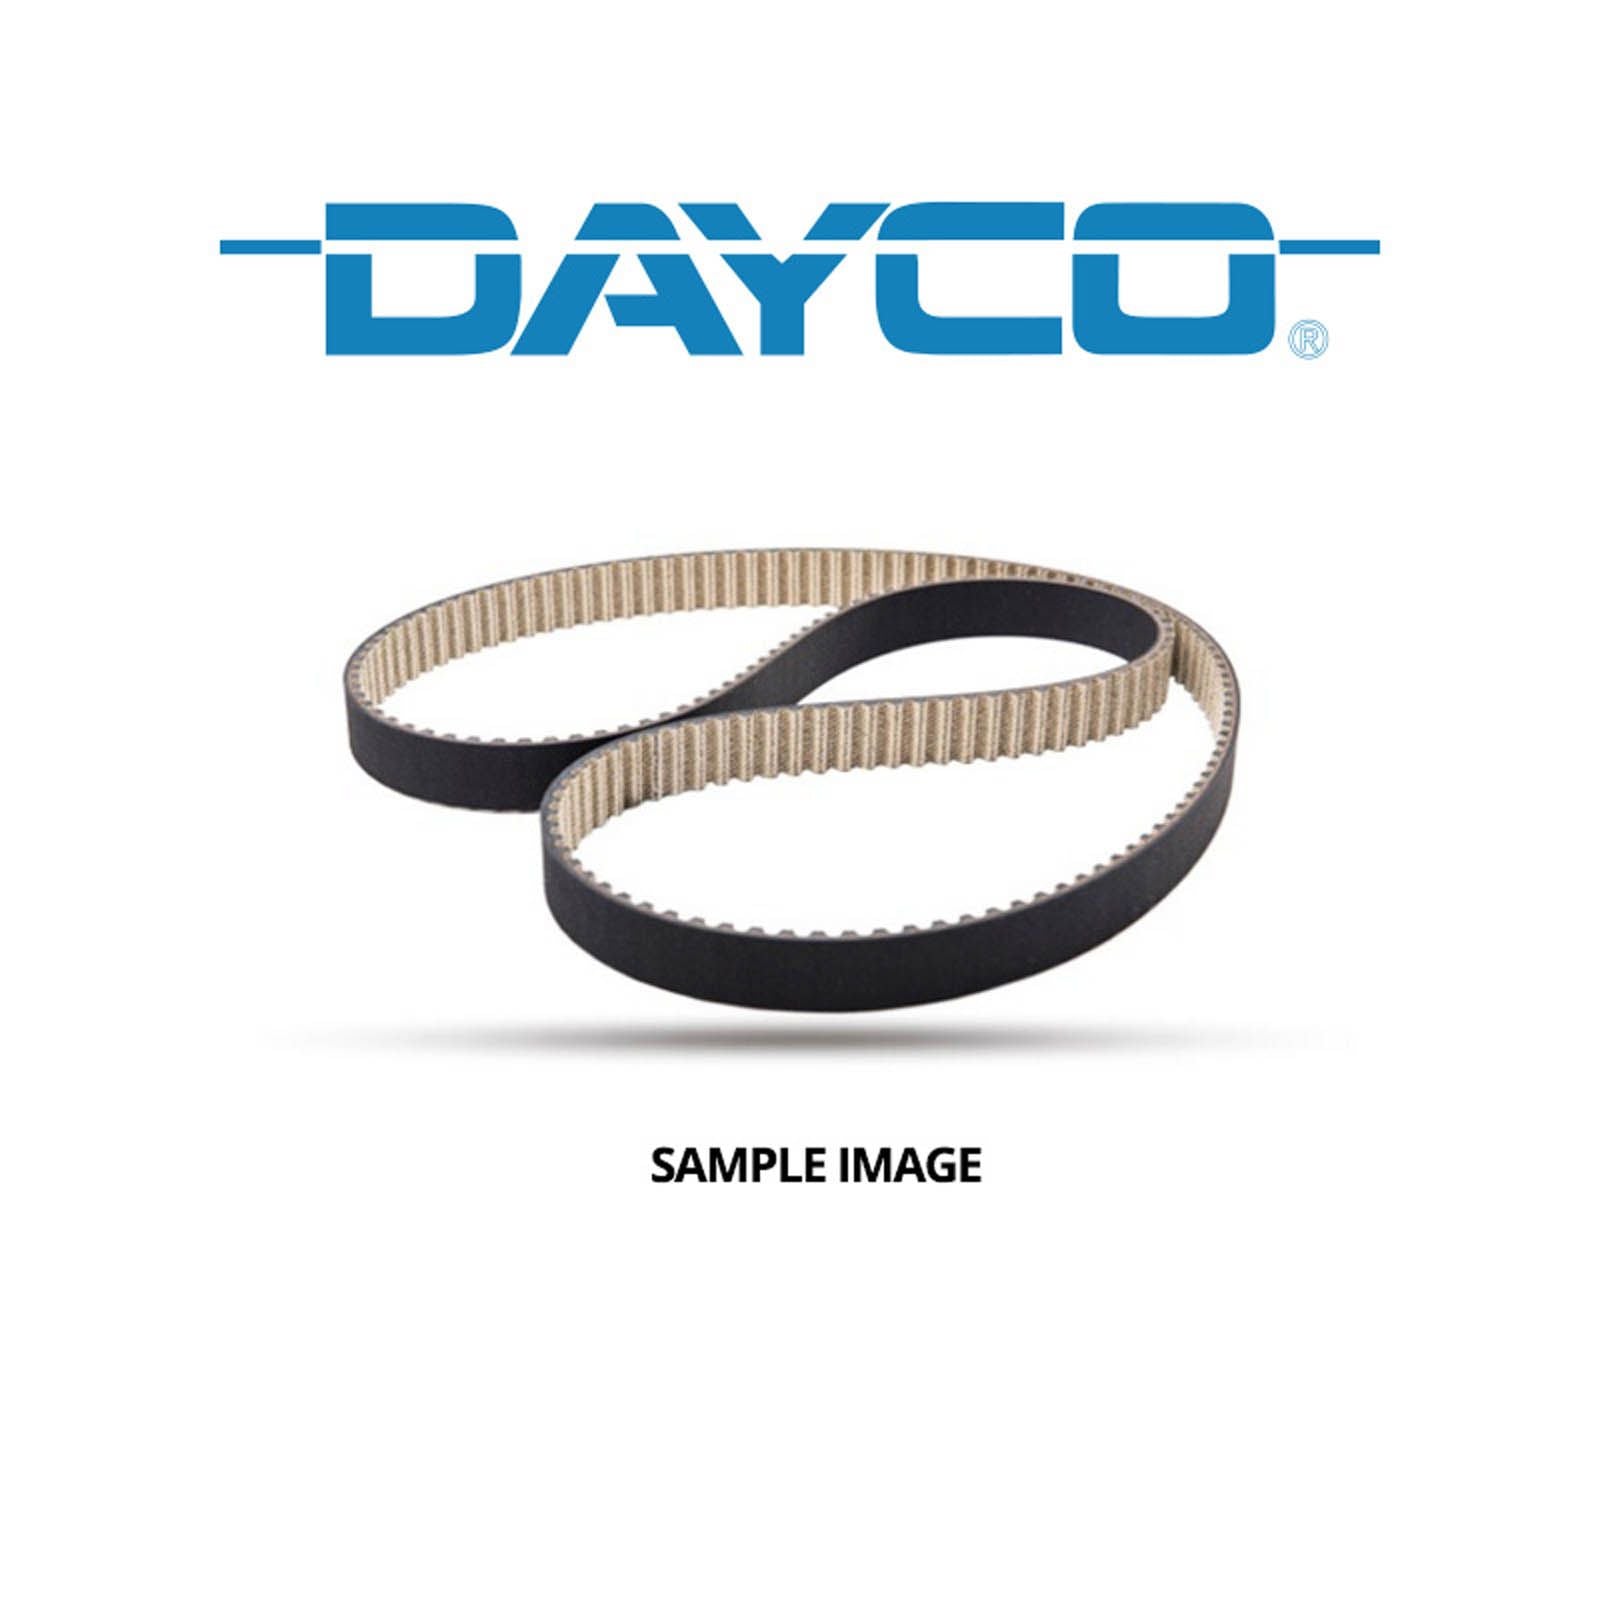 New DAYCO ATV Drive Belt HP 30.5 X 1100 HP2026 #ATVDBHP2026